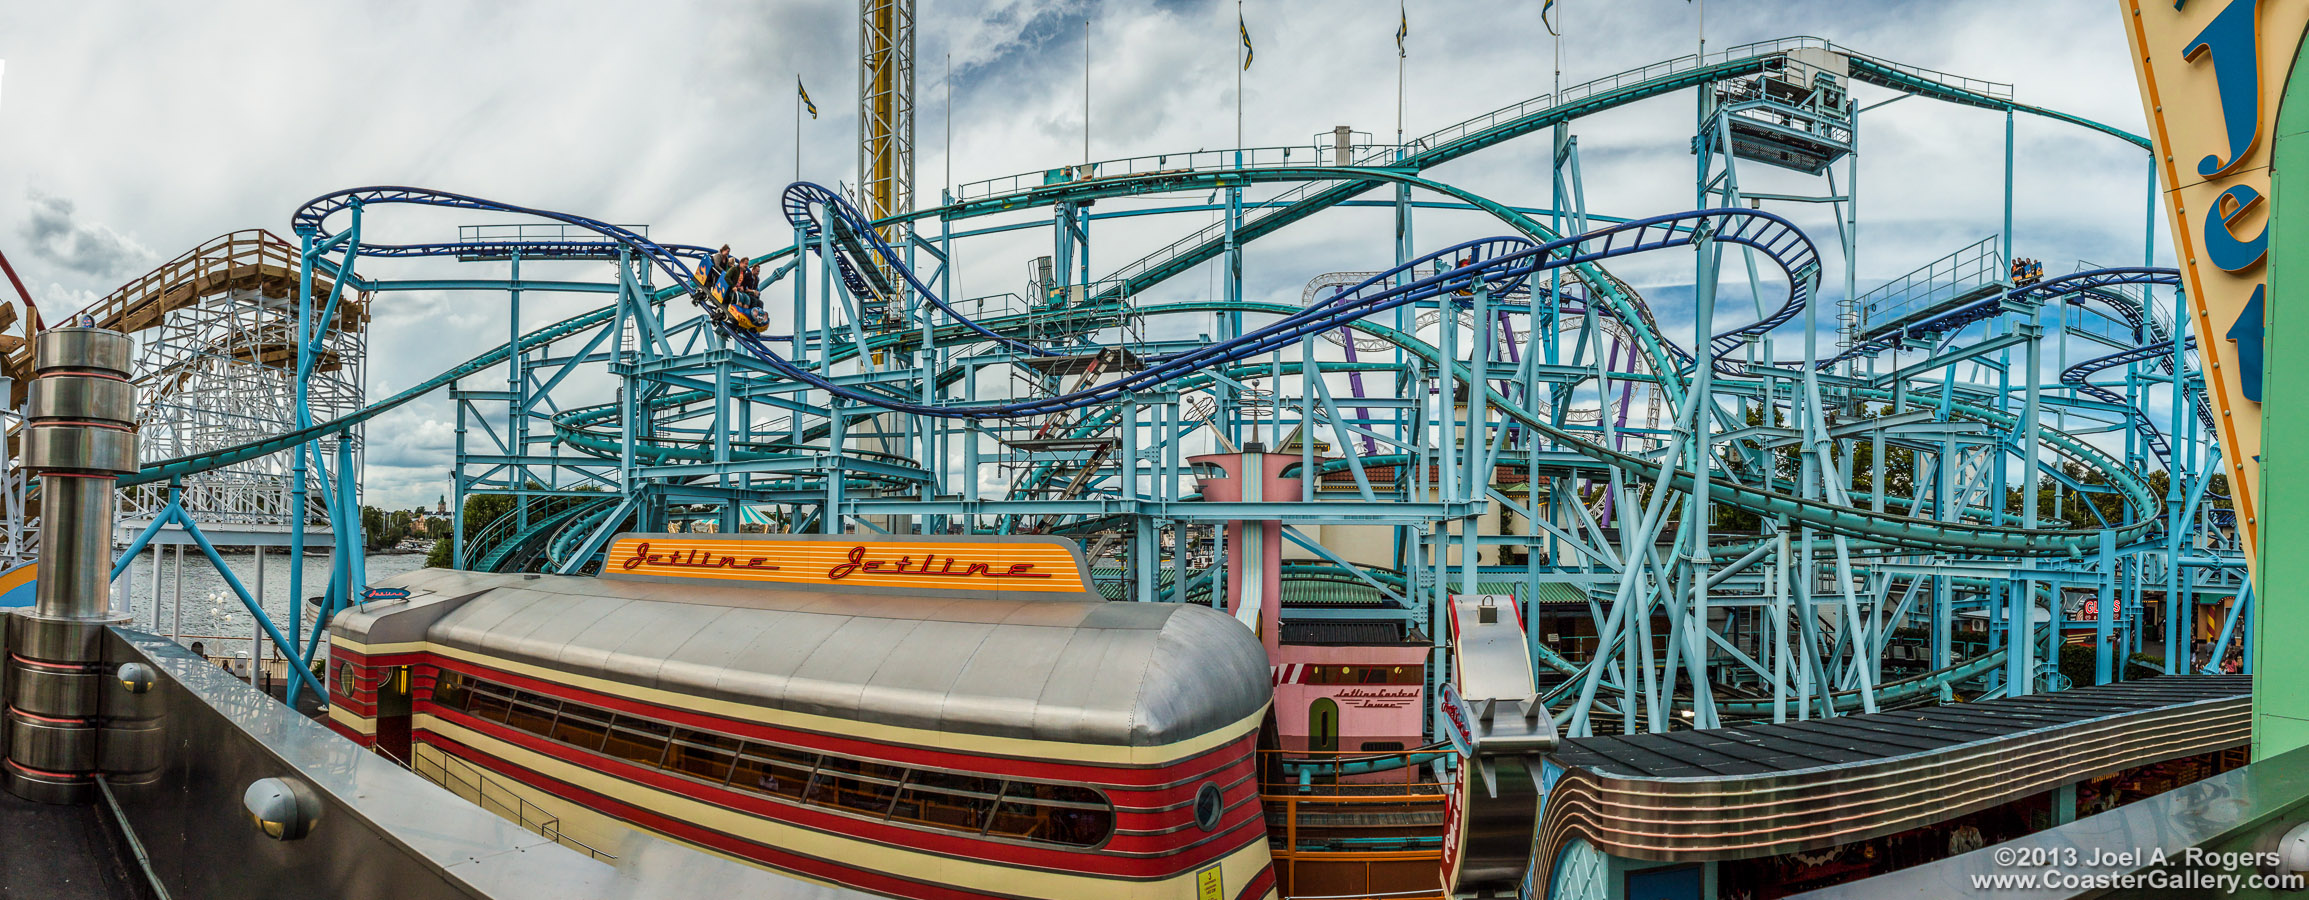 Panorama of the Jetline roller coaster.